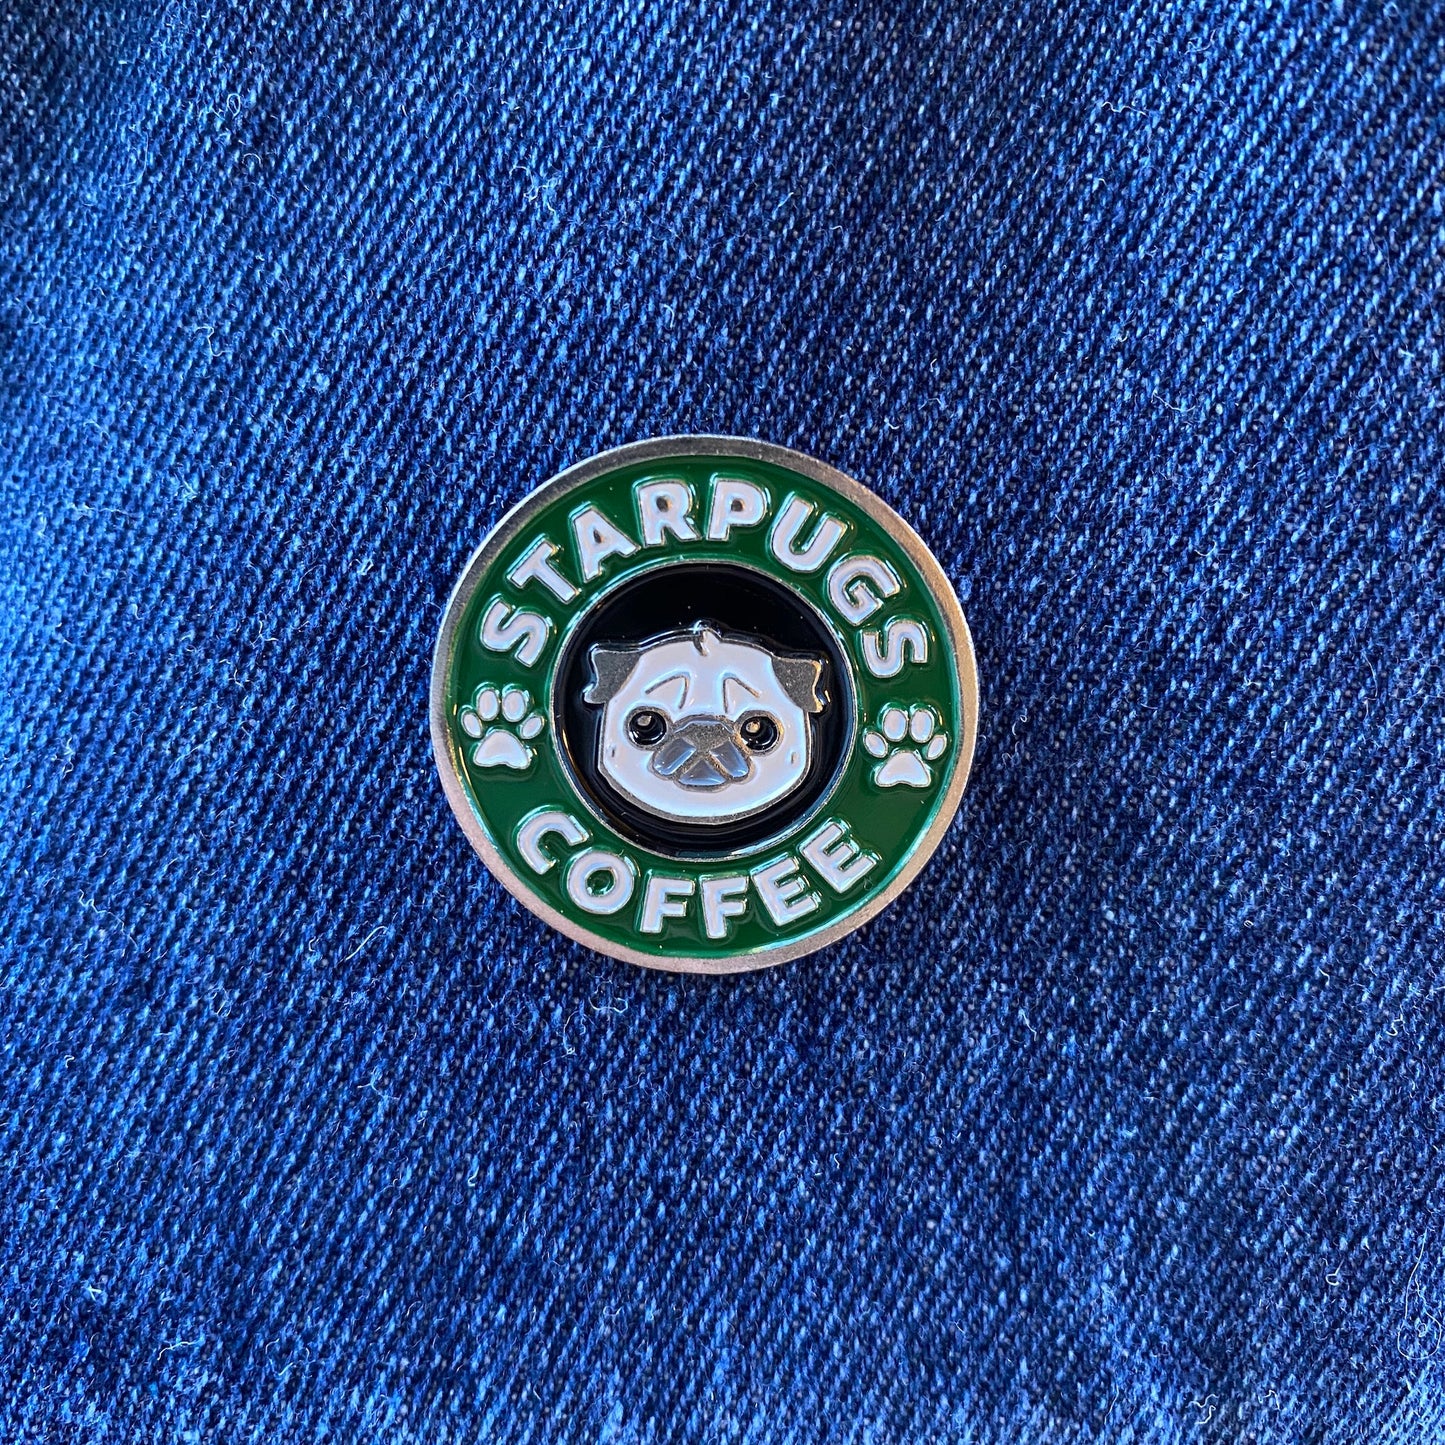 Starpugs Coffee Enamel Pin - thehappypin